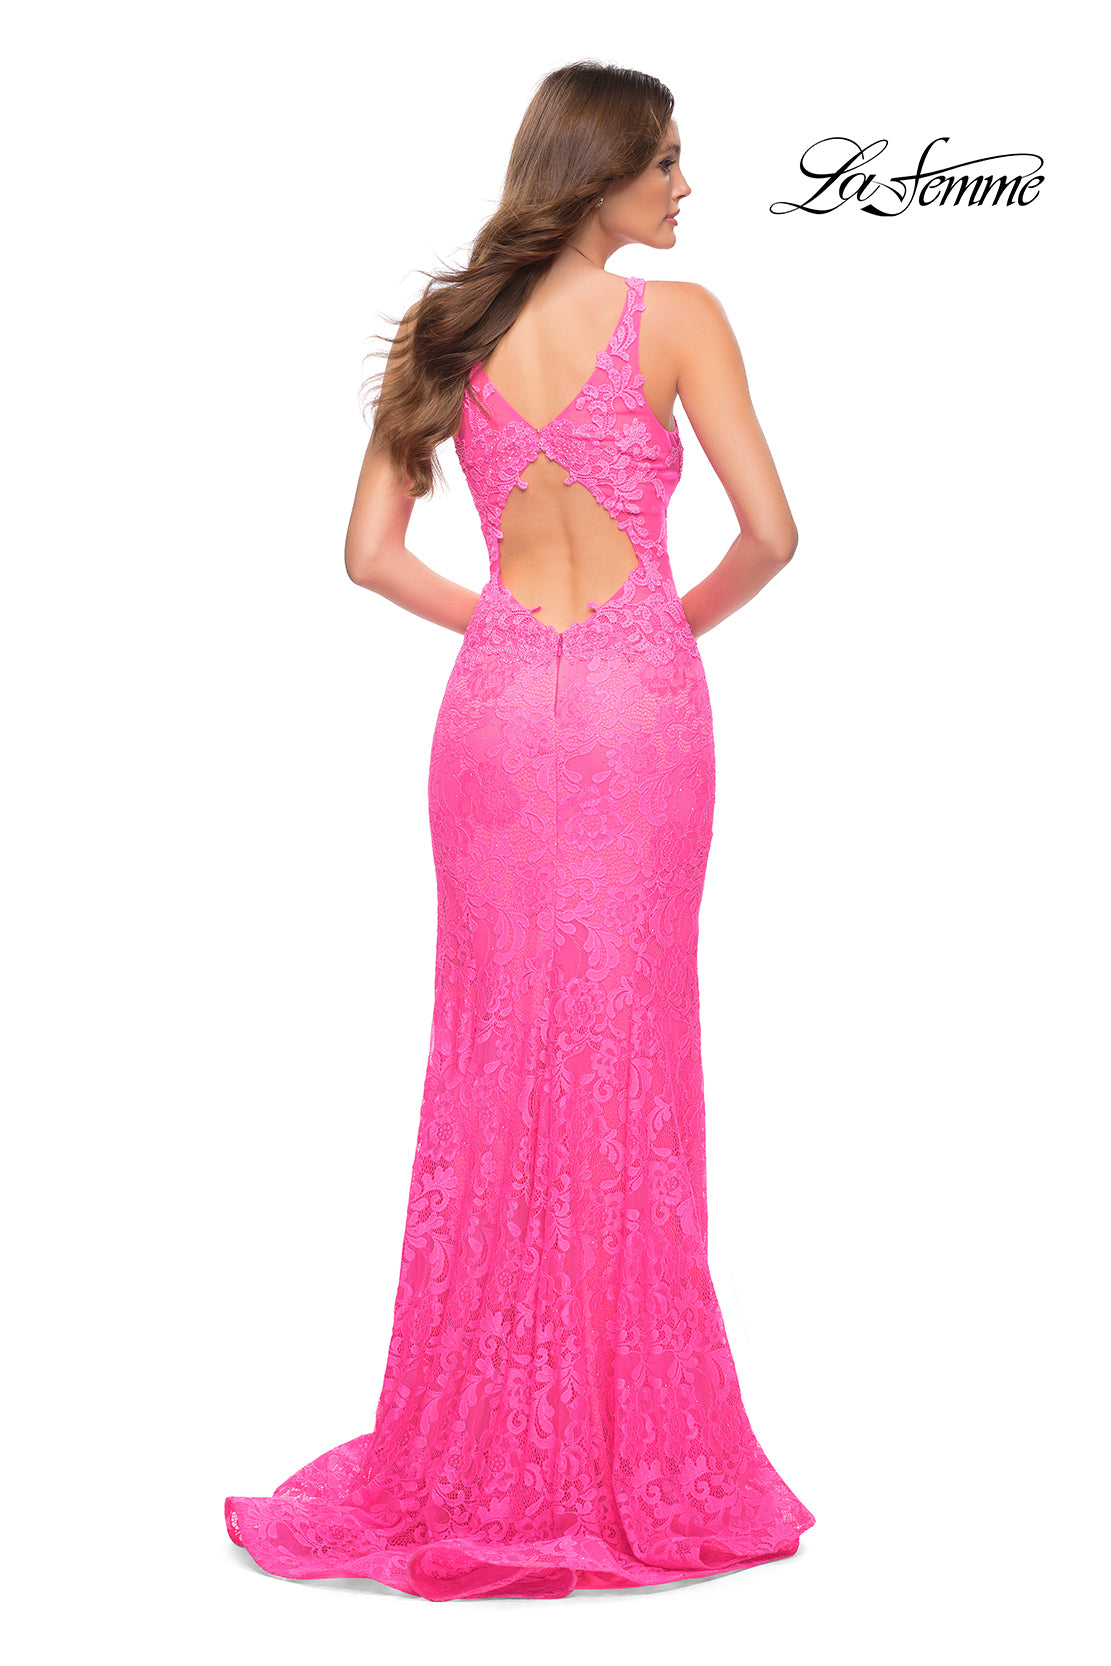  Pink Neon Prom Dress 29978